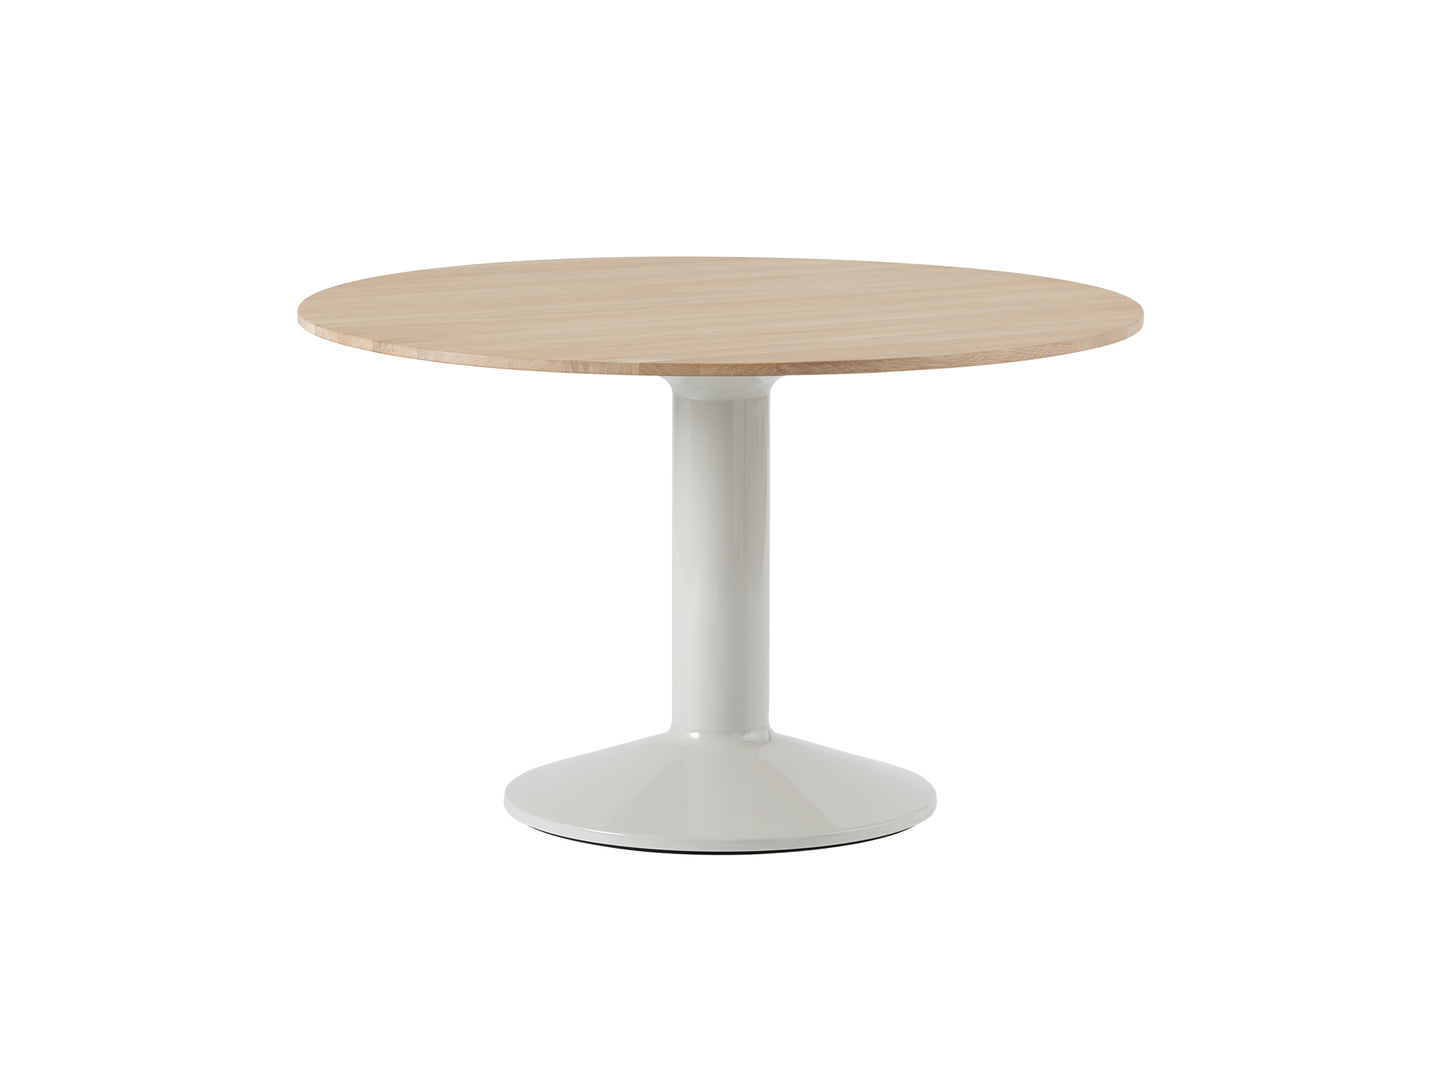 Midst Table by Muuto - Diameter: 120 cm / Oiled Oak Tabletop with Grey Steel Base